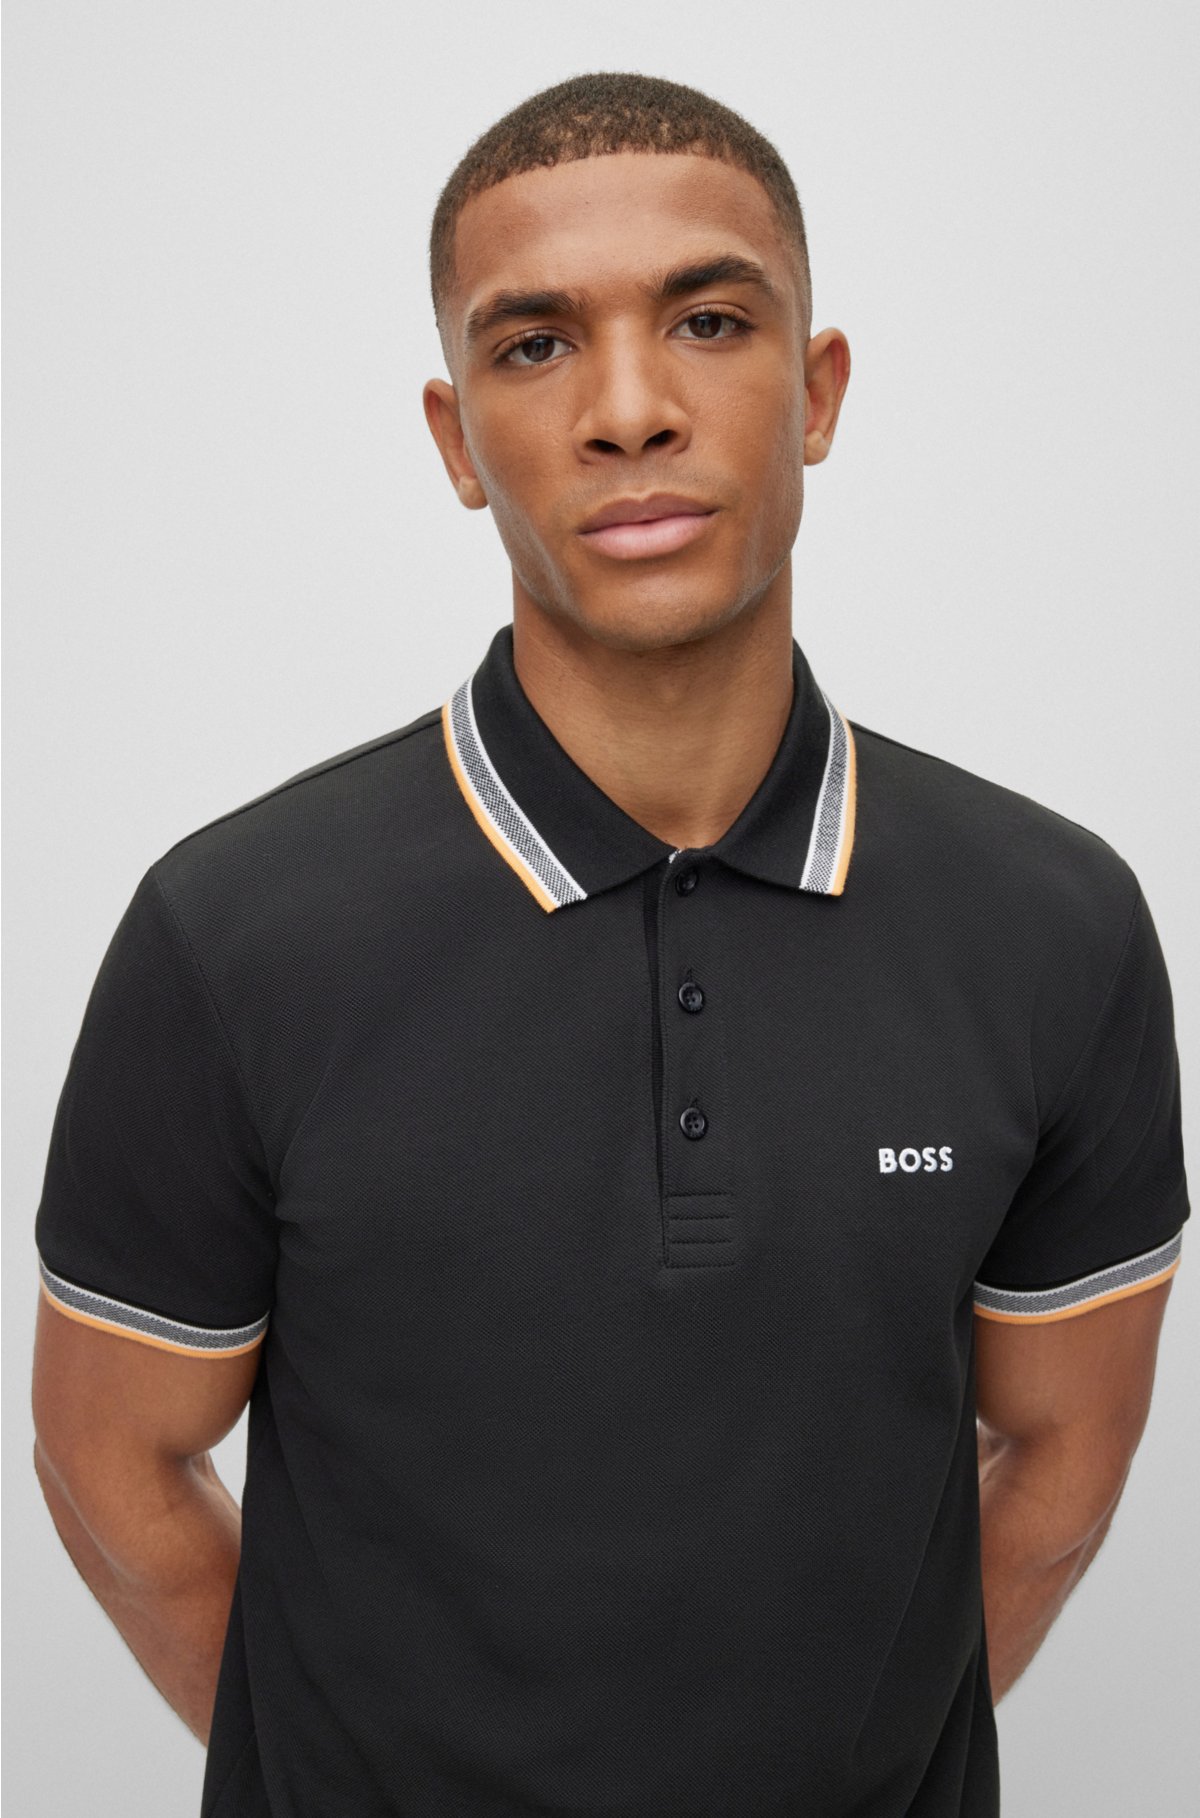 Cotton polo shirt with logo, Black